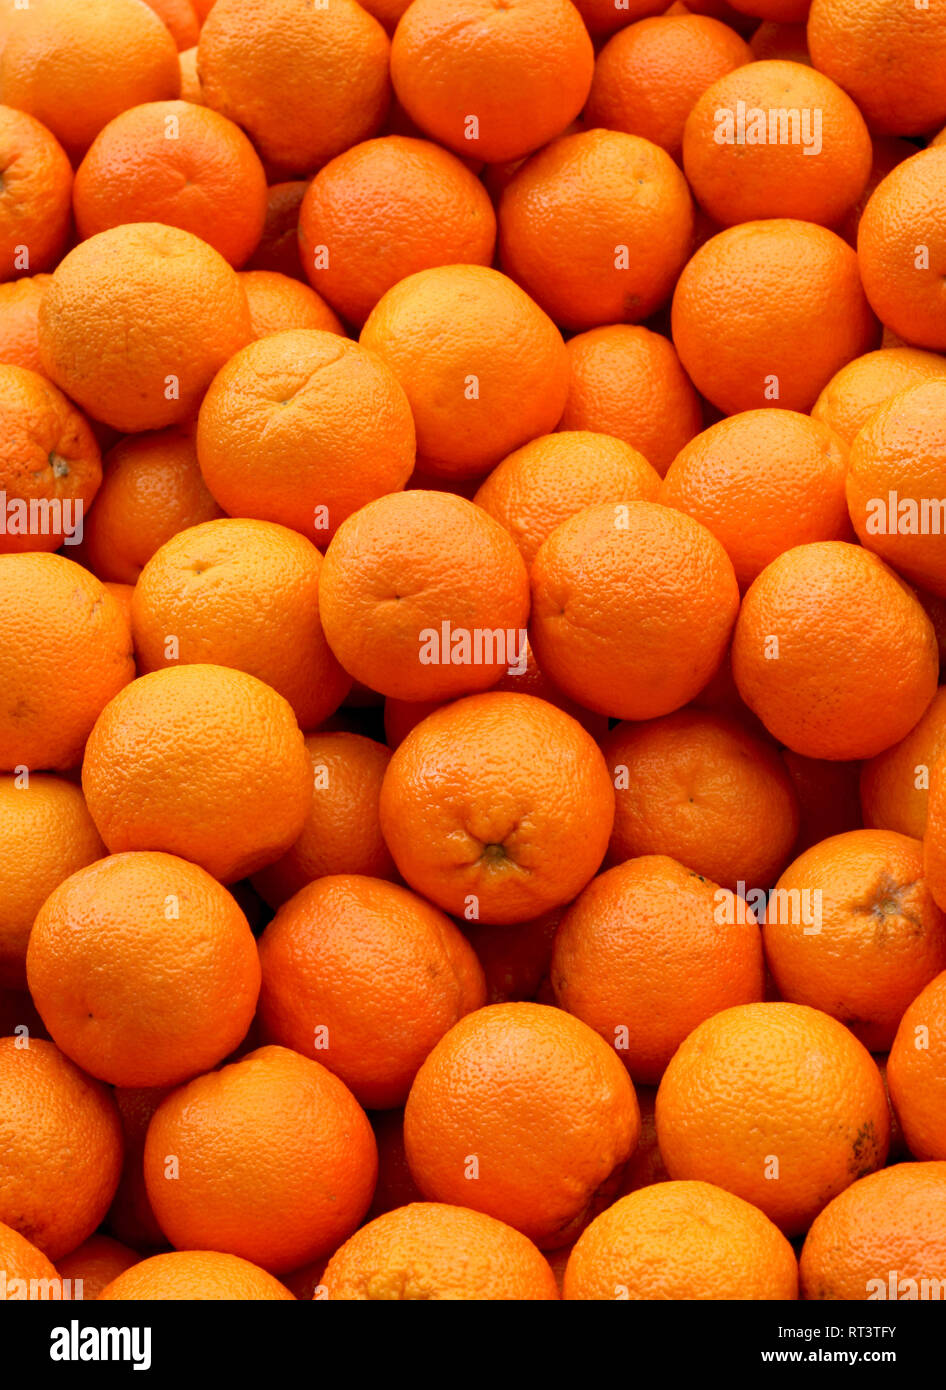 bunch-of-fresh-and-big-oranges-fruit-RT3TFY.jpg